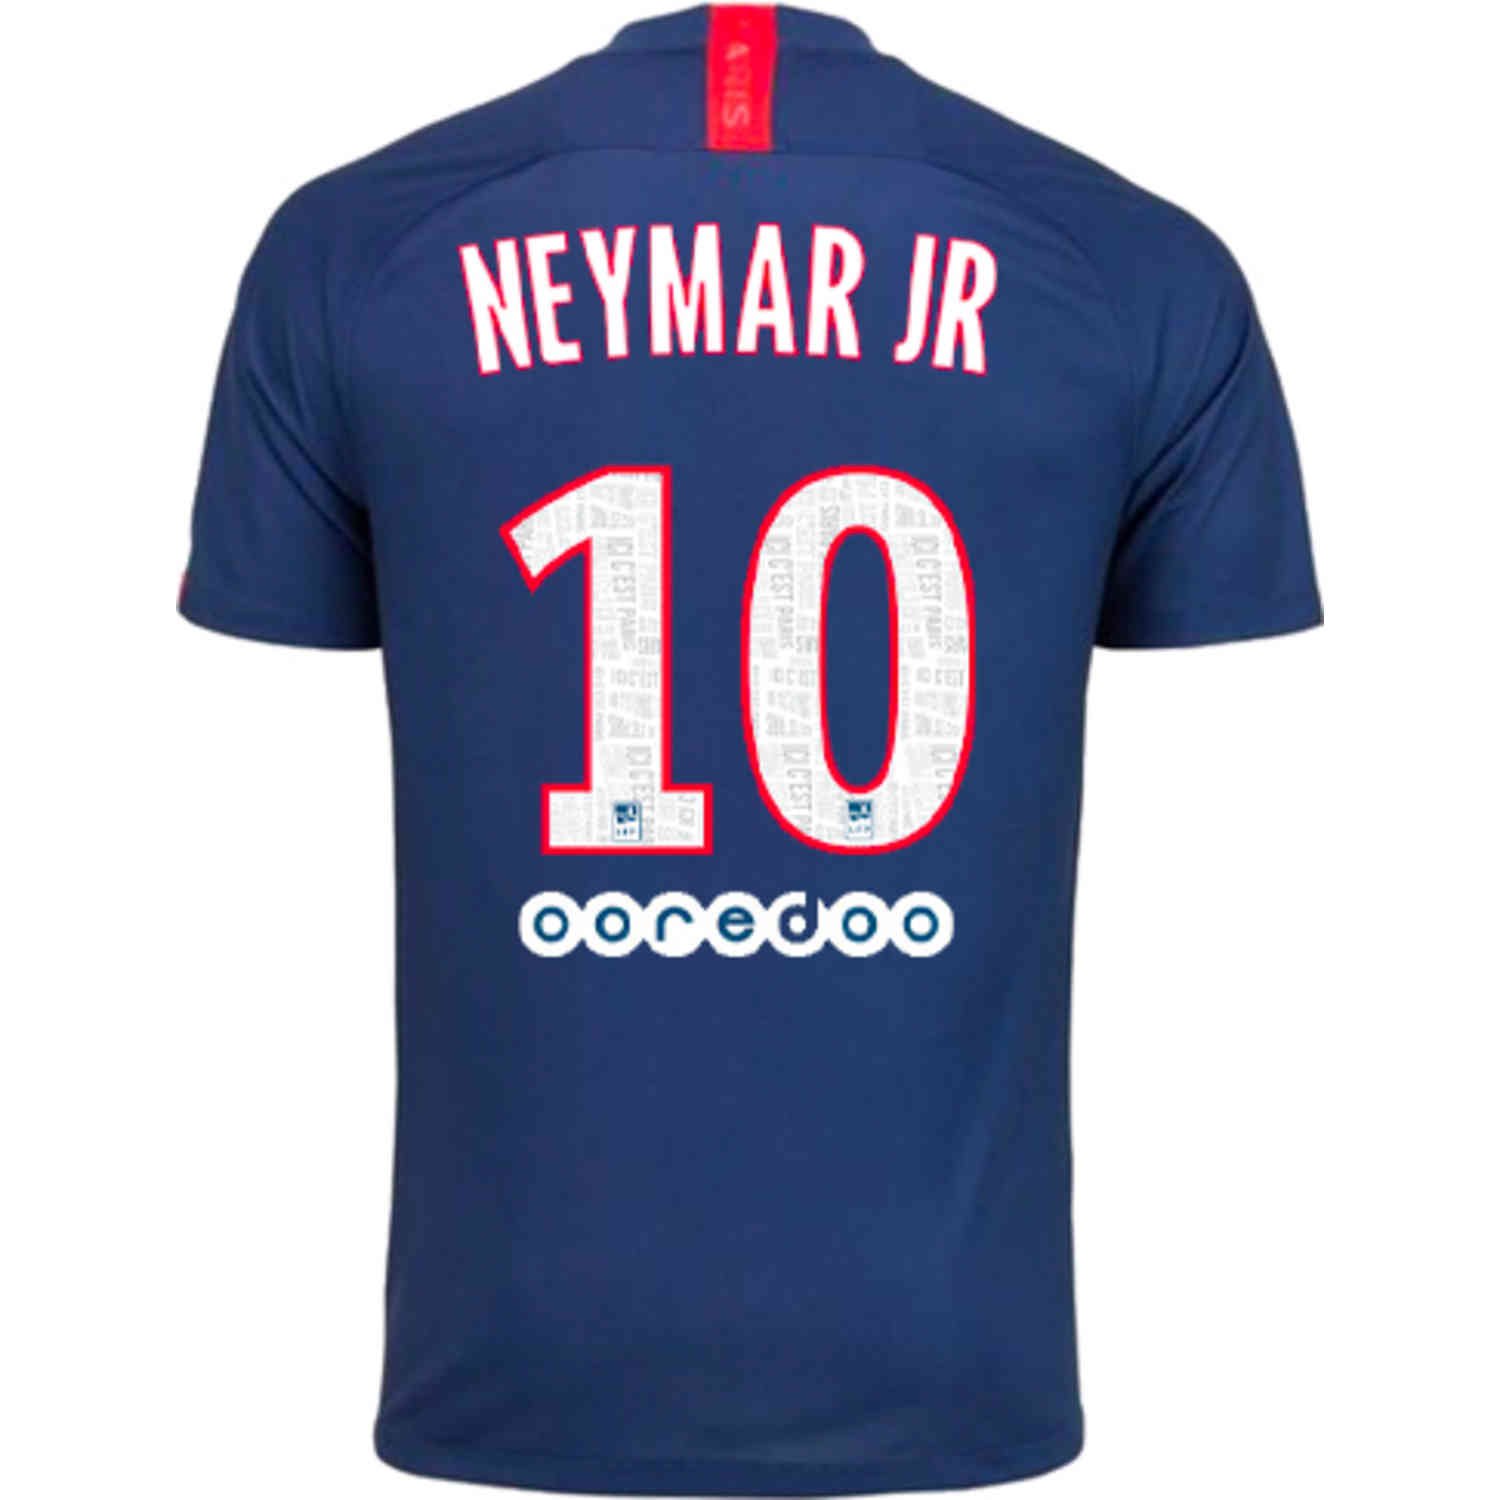 neymar jr kit number